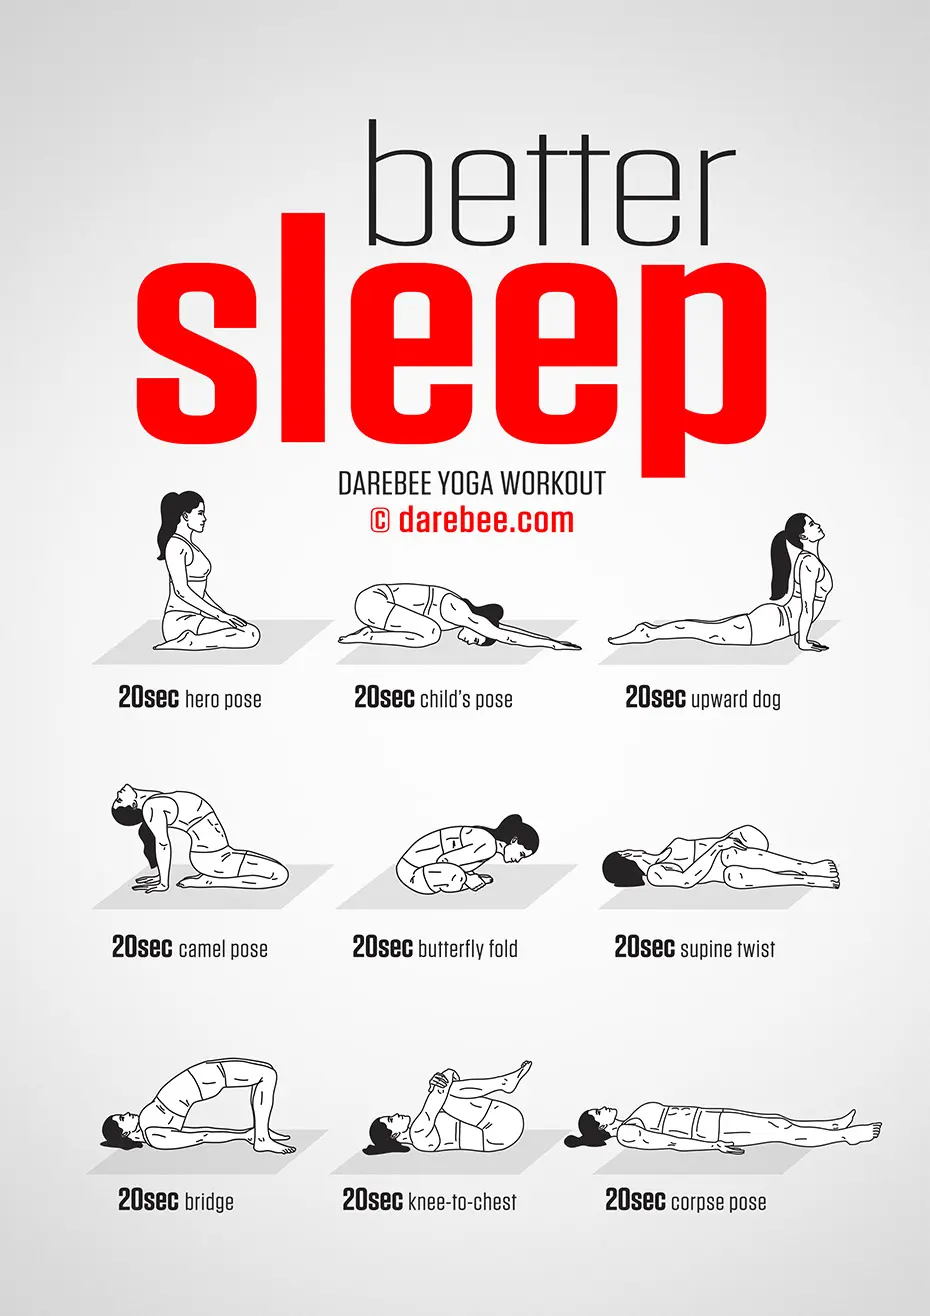 yoga for good sleep - When should I do yoga to sleep better